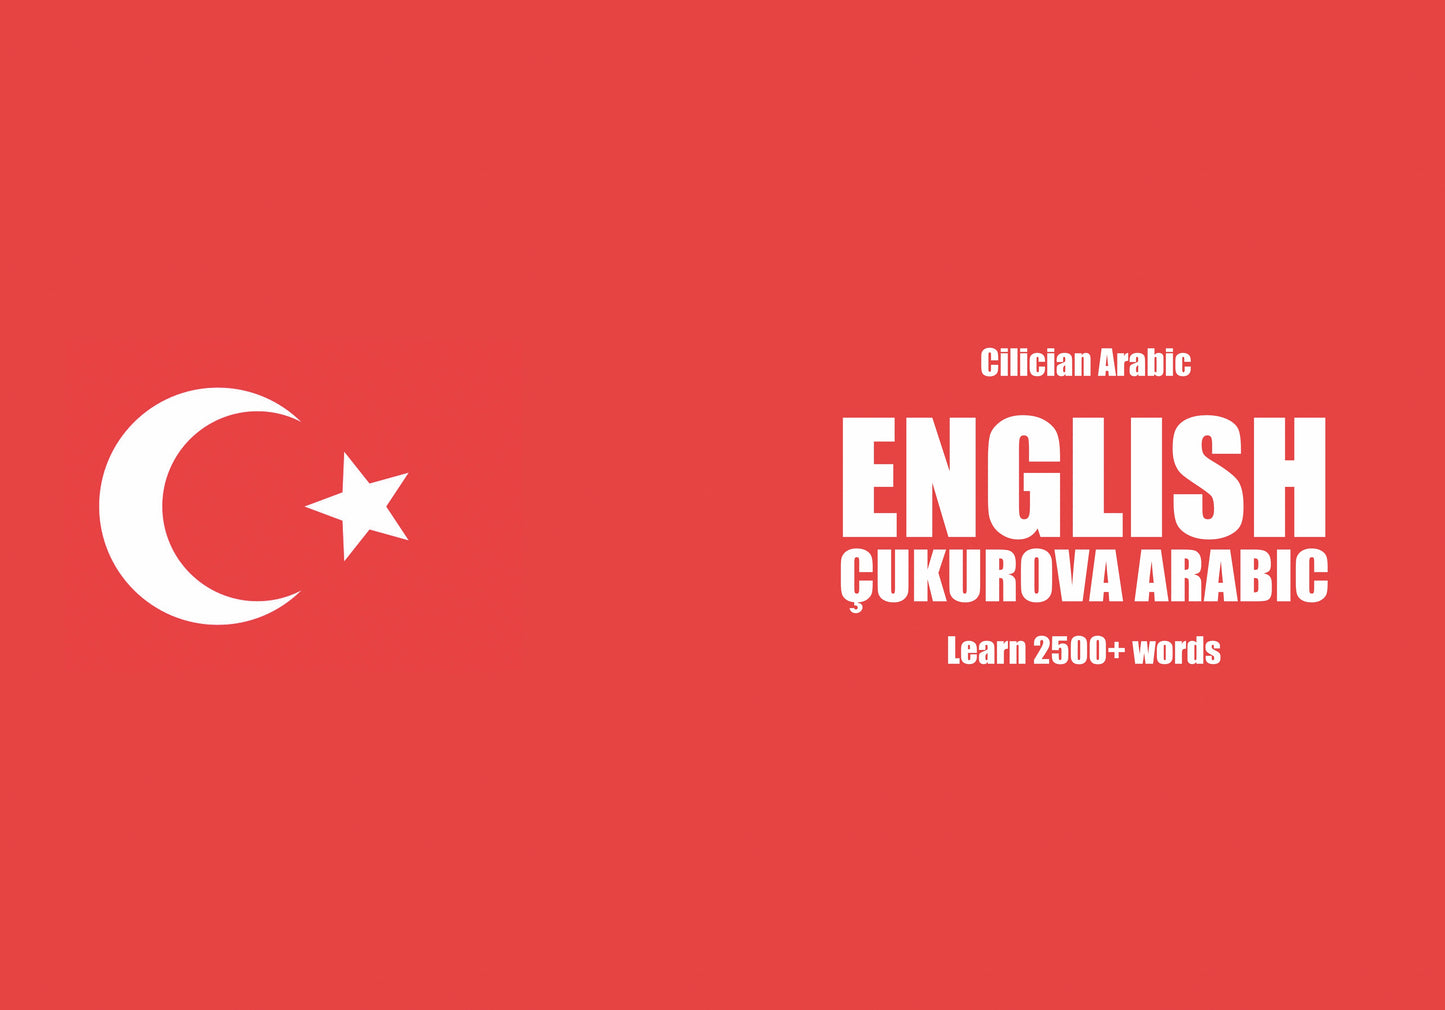 English-Çukurova Arabic (Turkey) fill in the blanks notebook